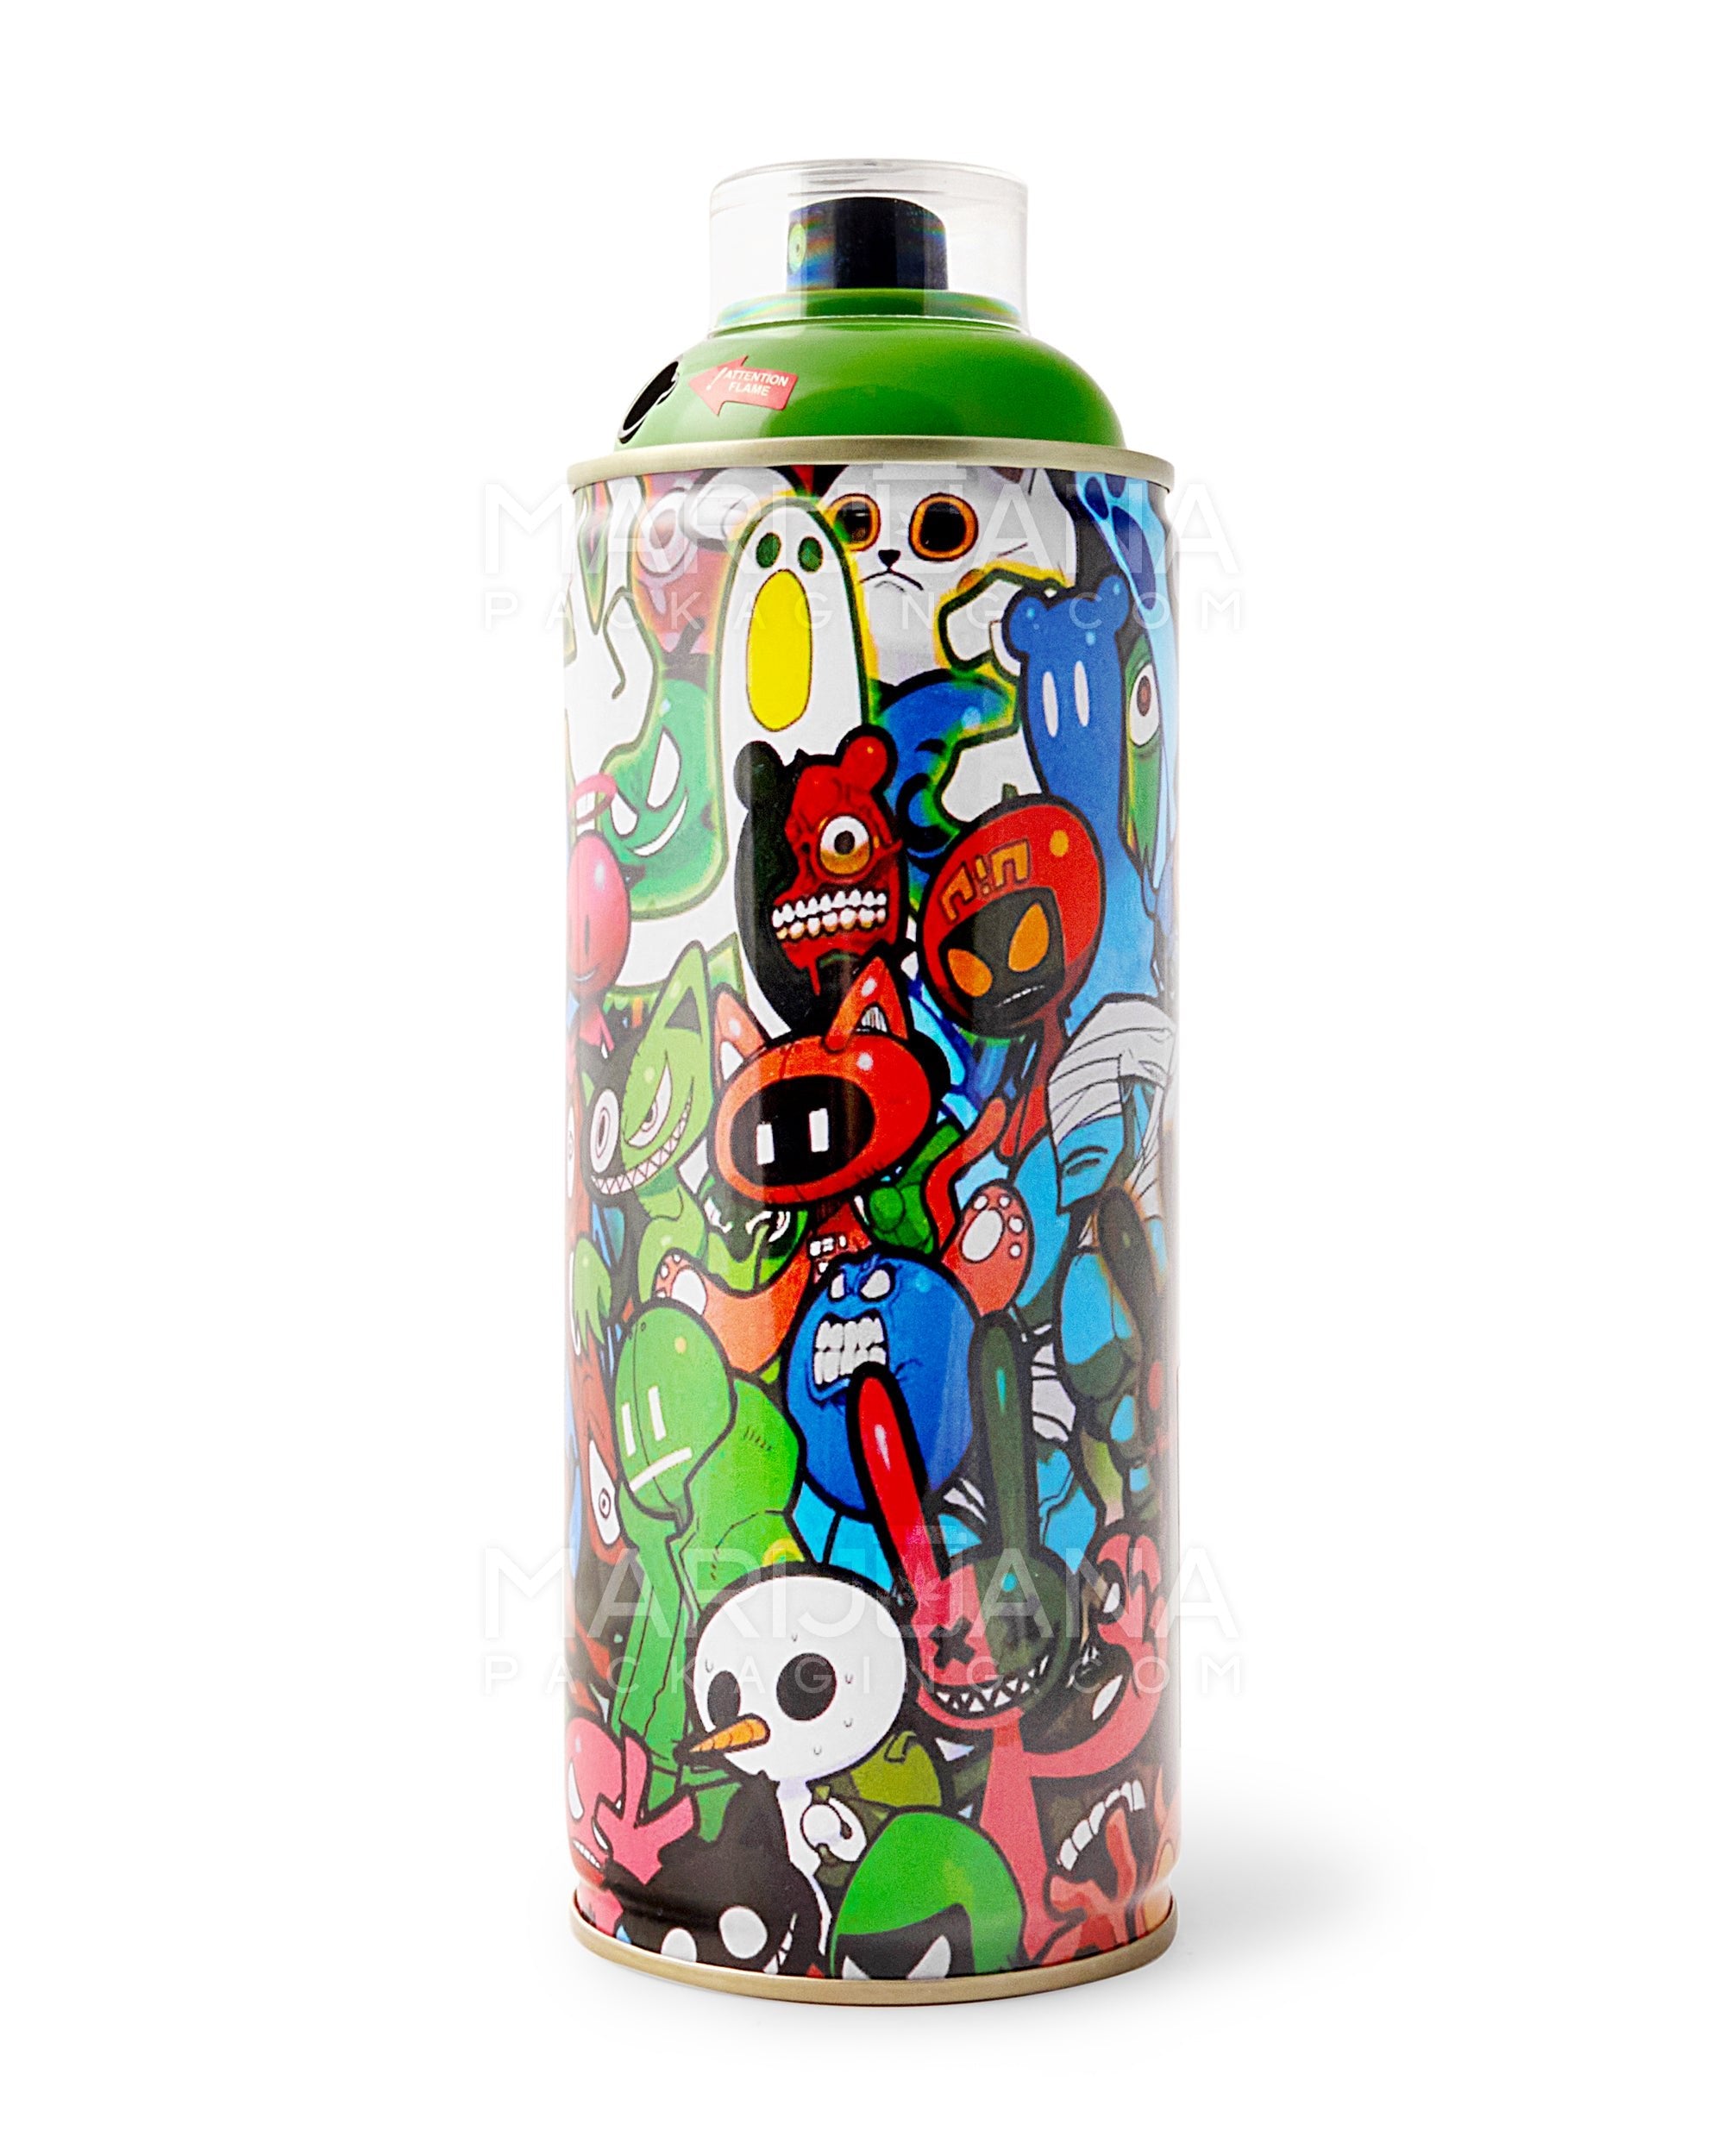 TECHNO TORCH | Graffiti Art Design Aluminum Spray Can Flame Torch | 7.5in Tall - Butane - Green - 1